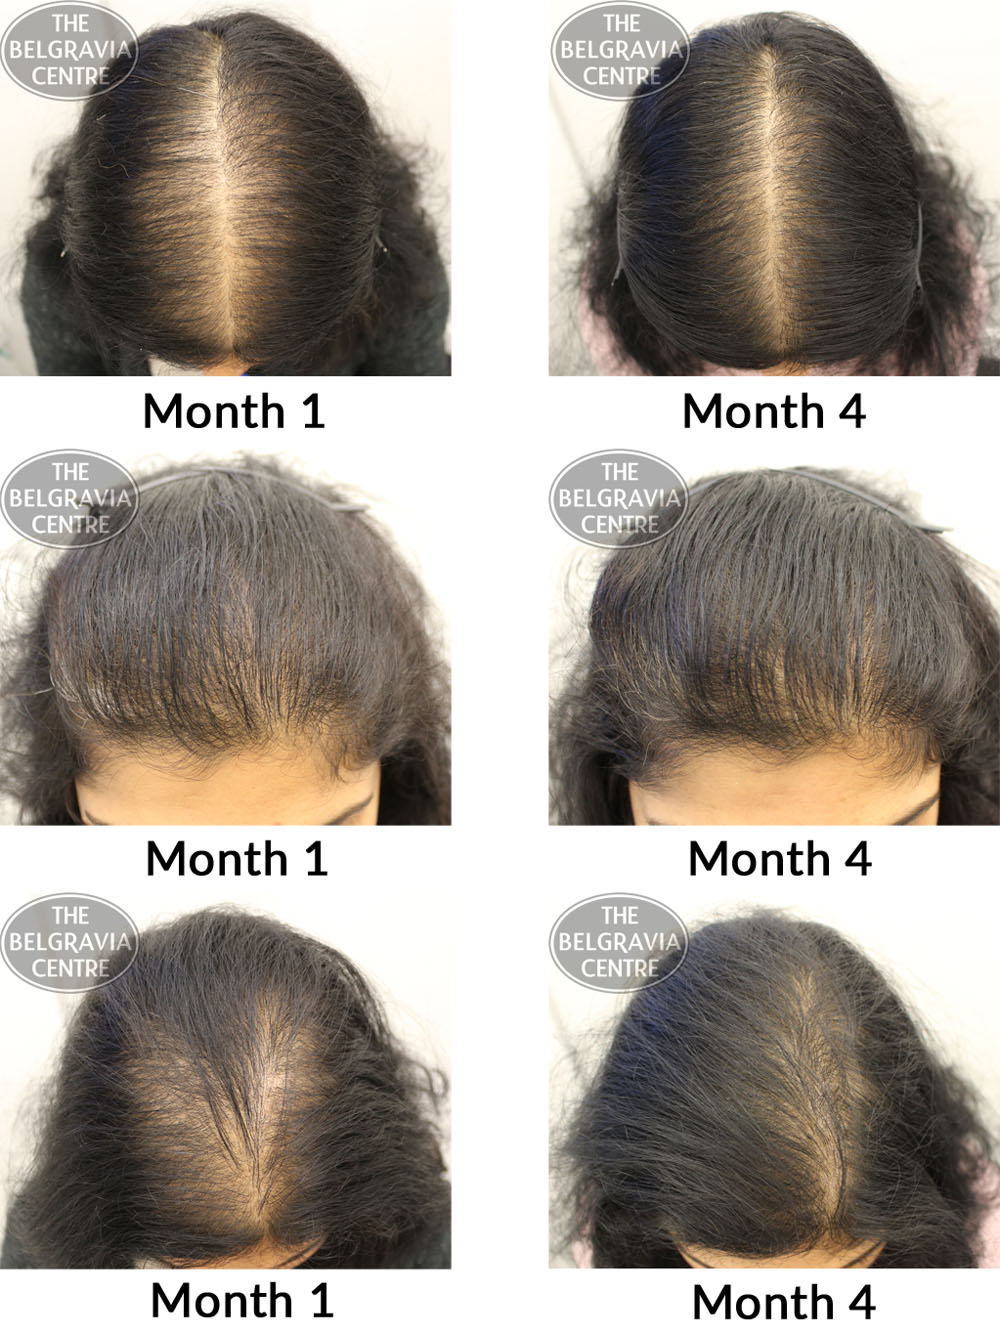 female pattern hair loss the belgravia centre 16 01 2017 2